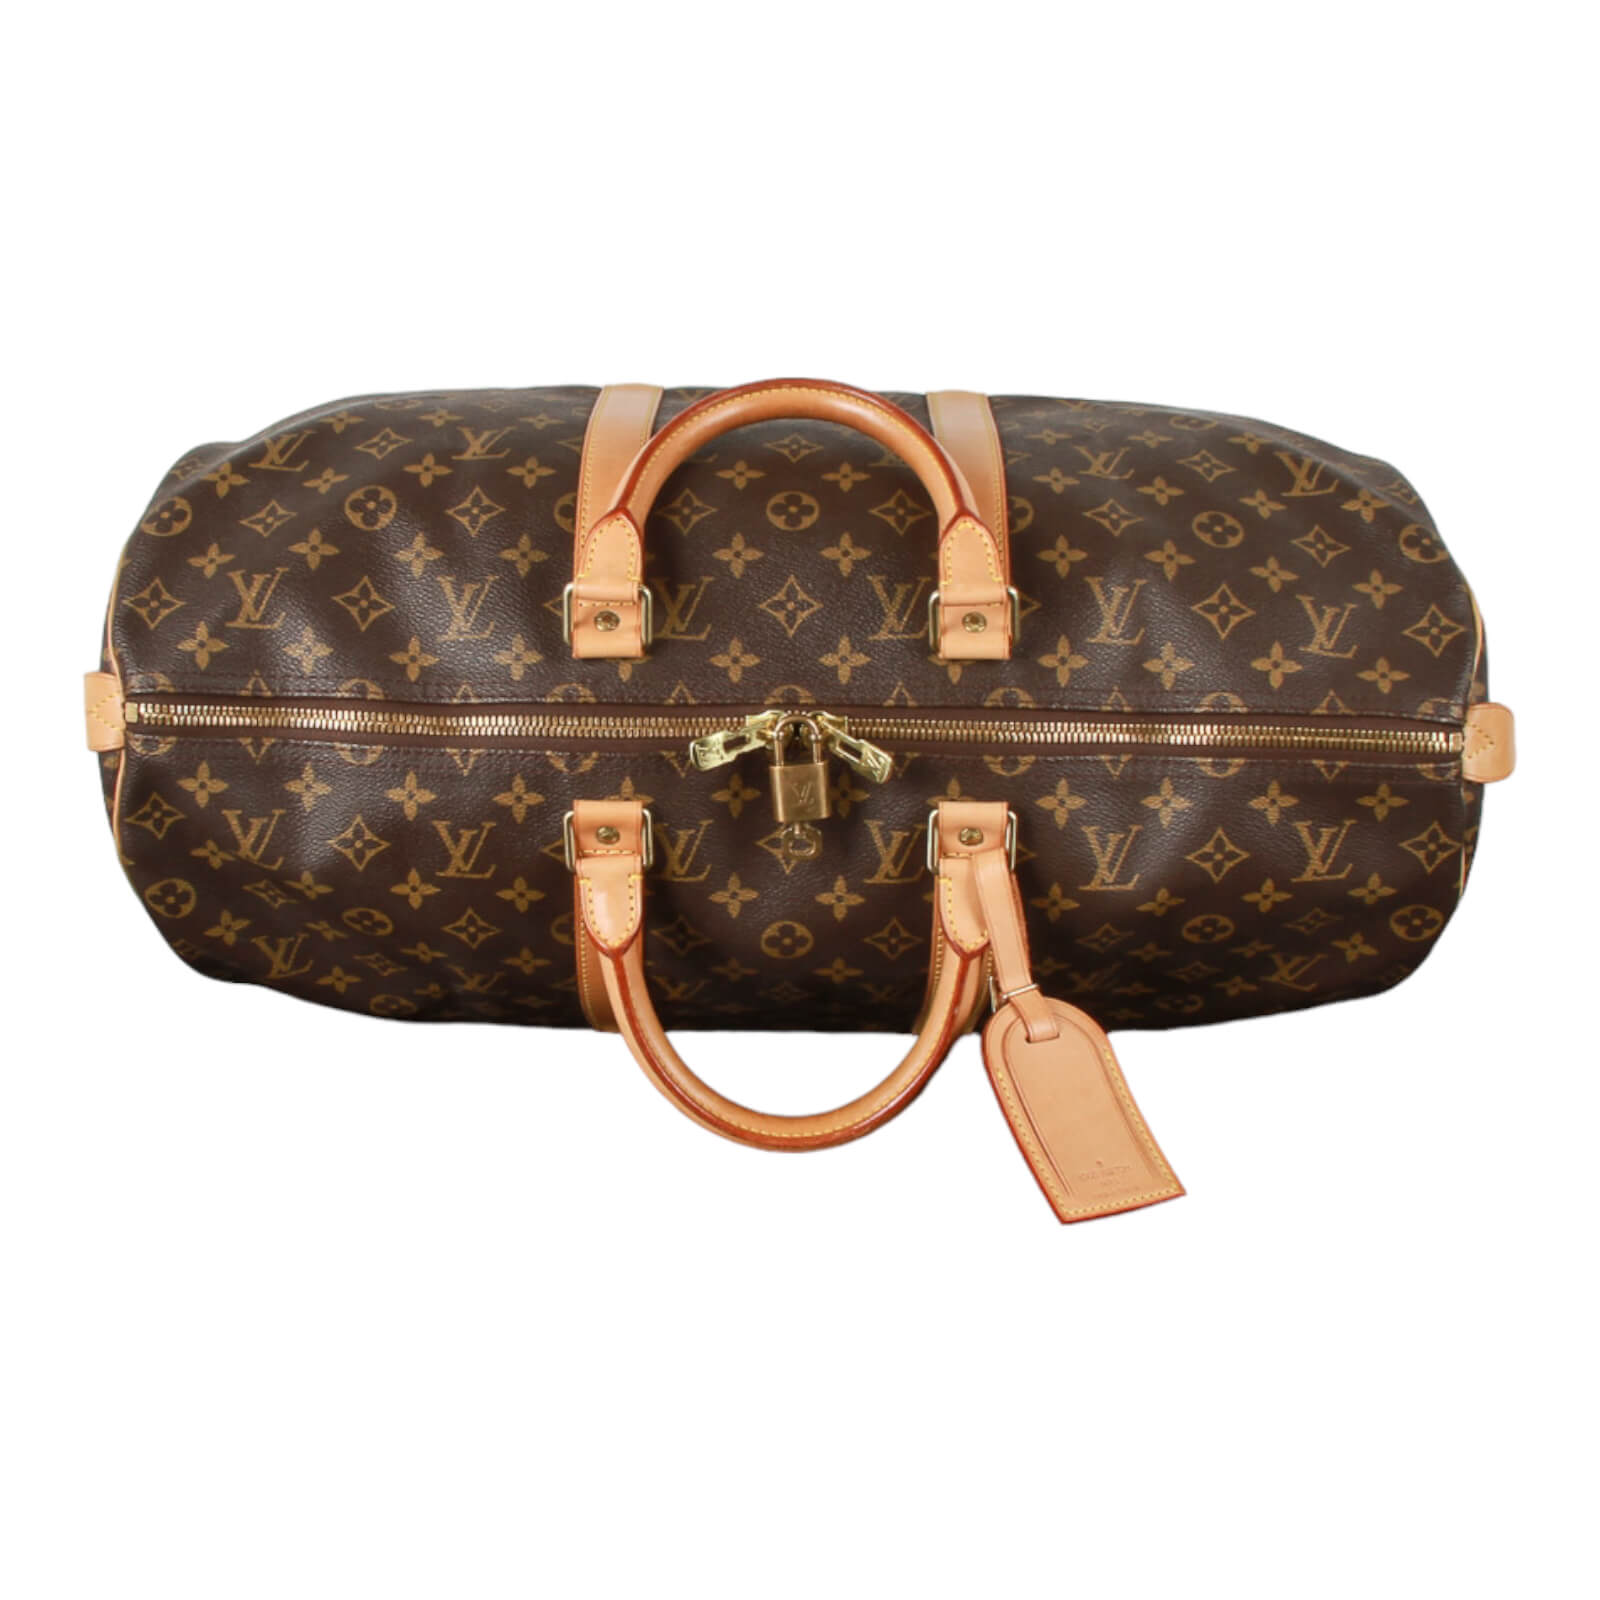 Gorgeous Authentic Louis Vuitton Monogram Keepall 50 Duffle Bag